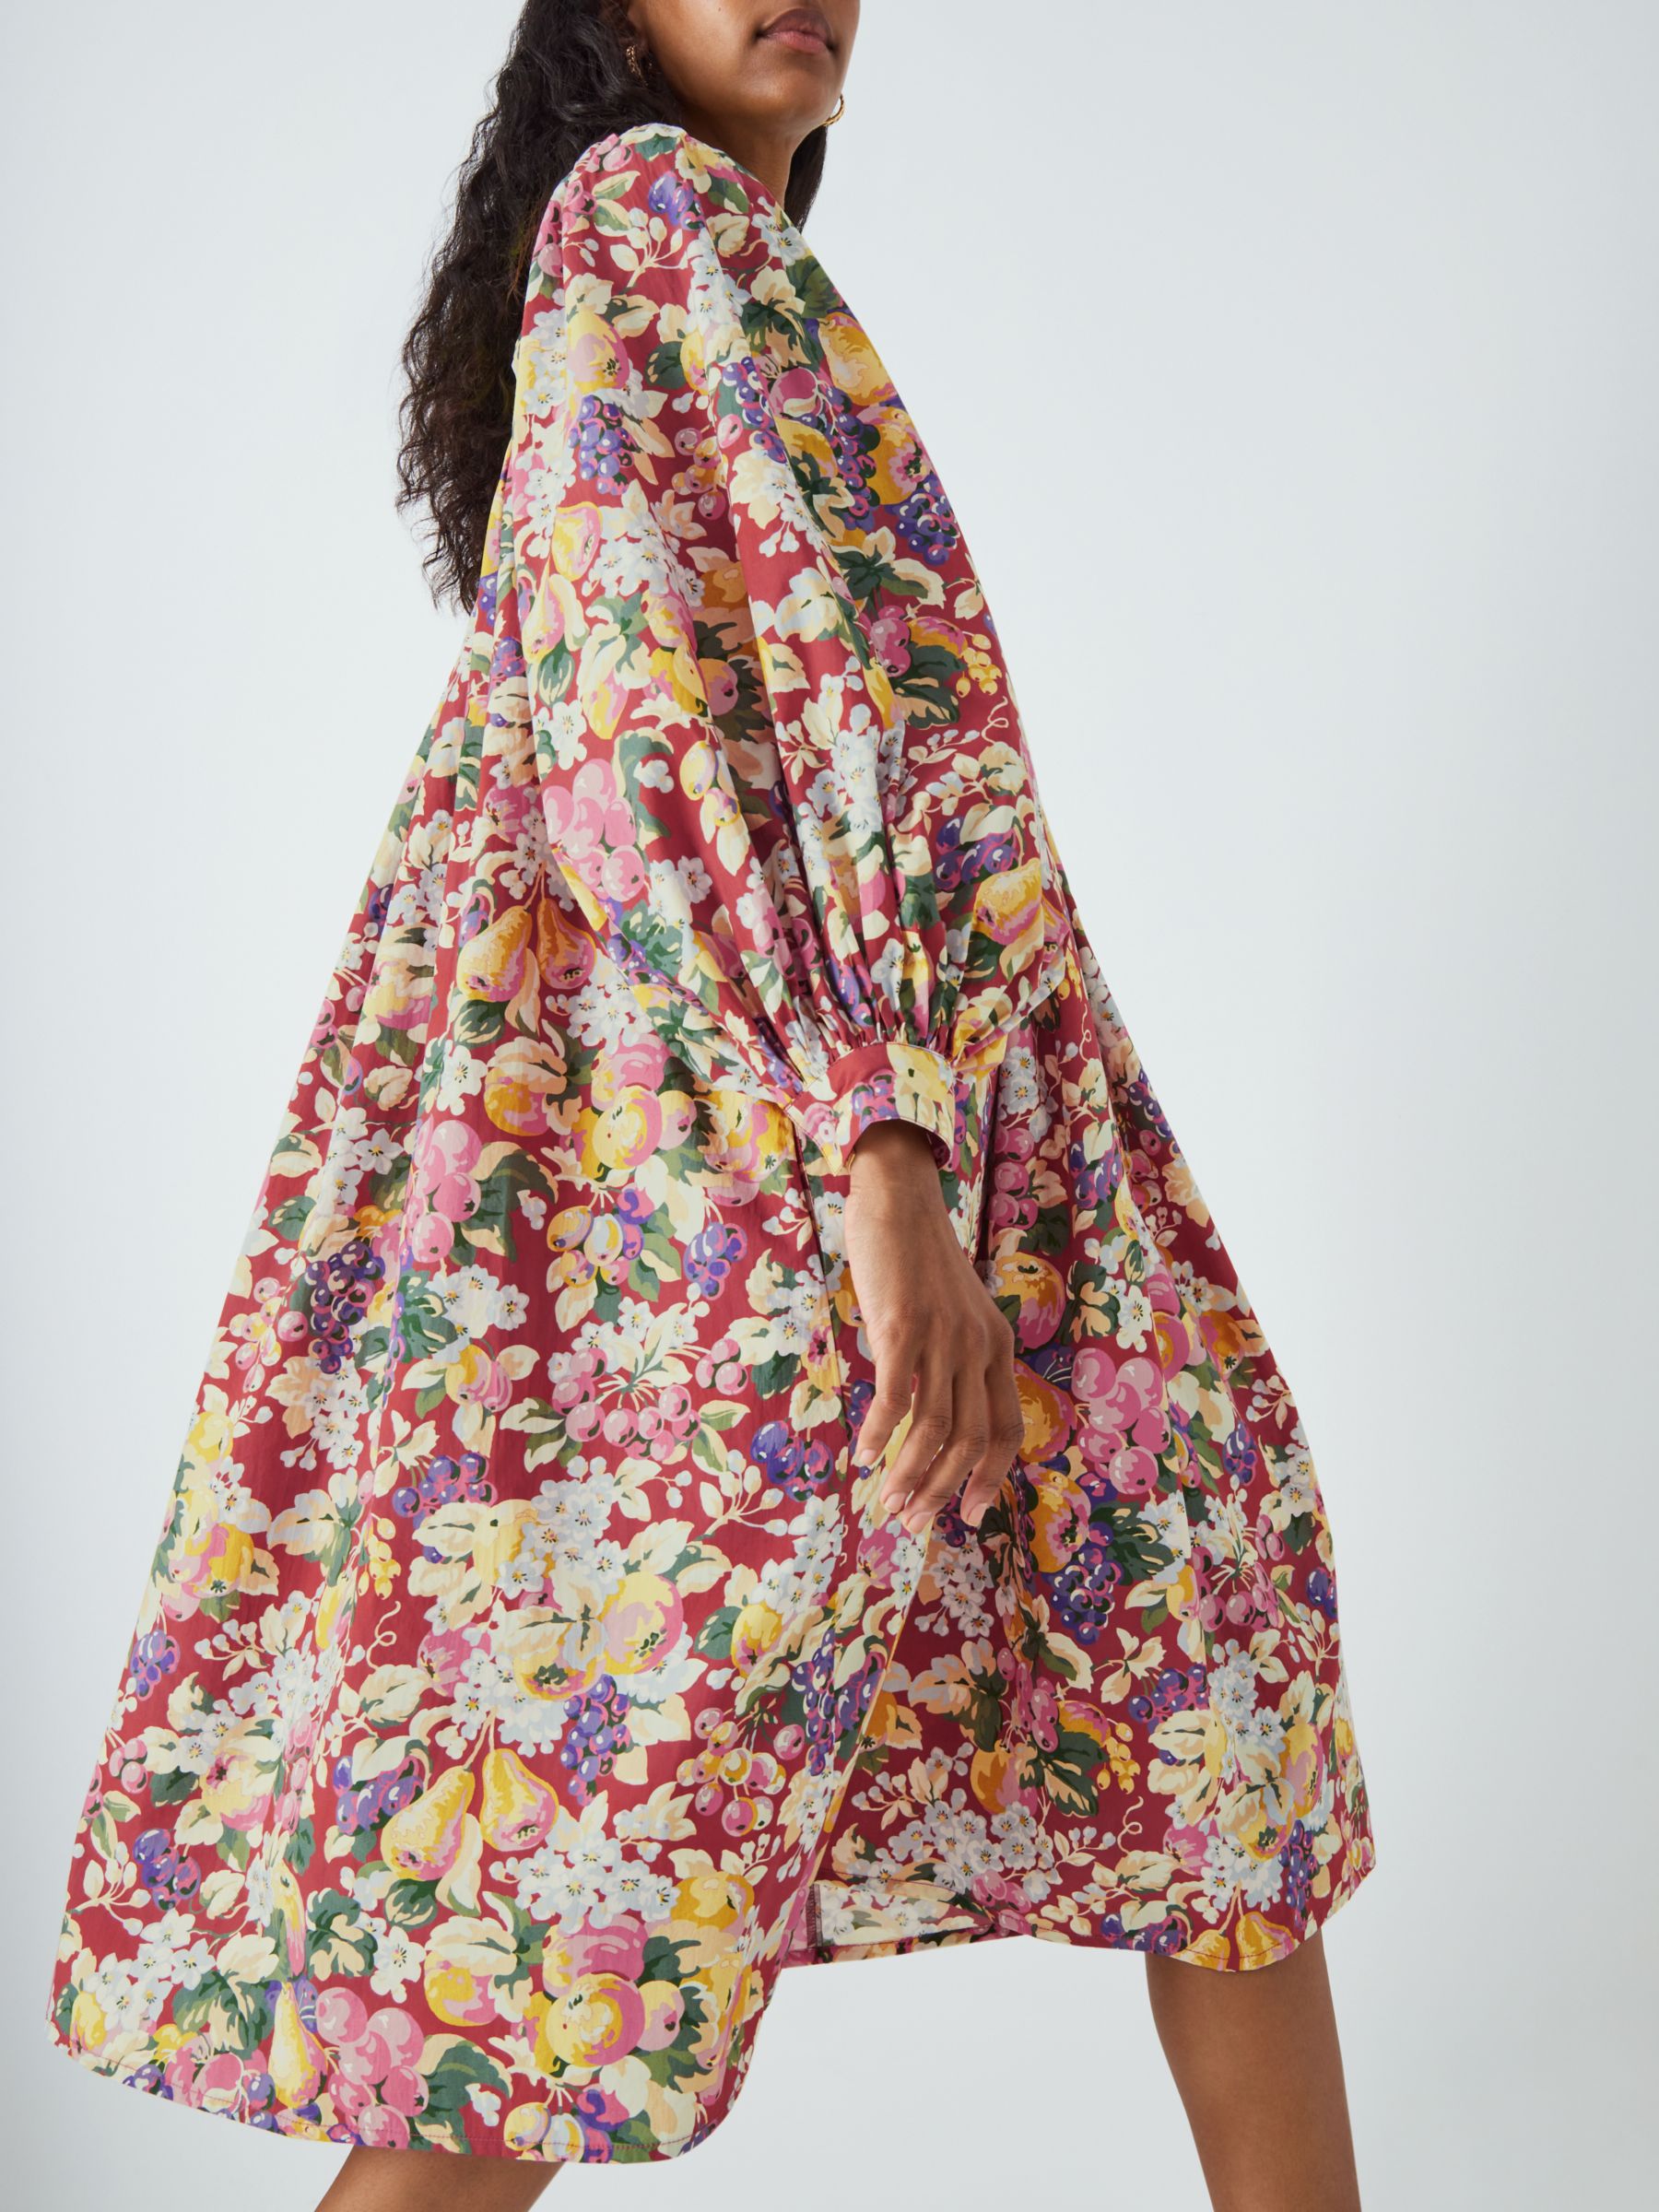 Batsheva x Laura Ashley Beaumaris Rubens Floral Dress, Multi, 8